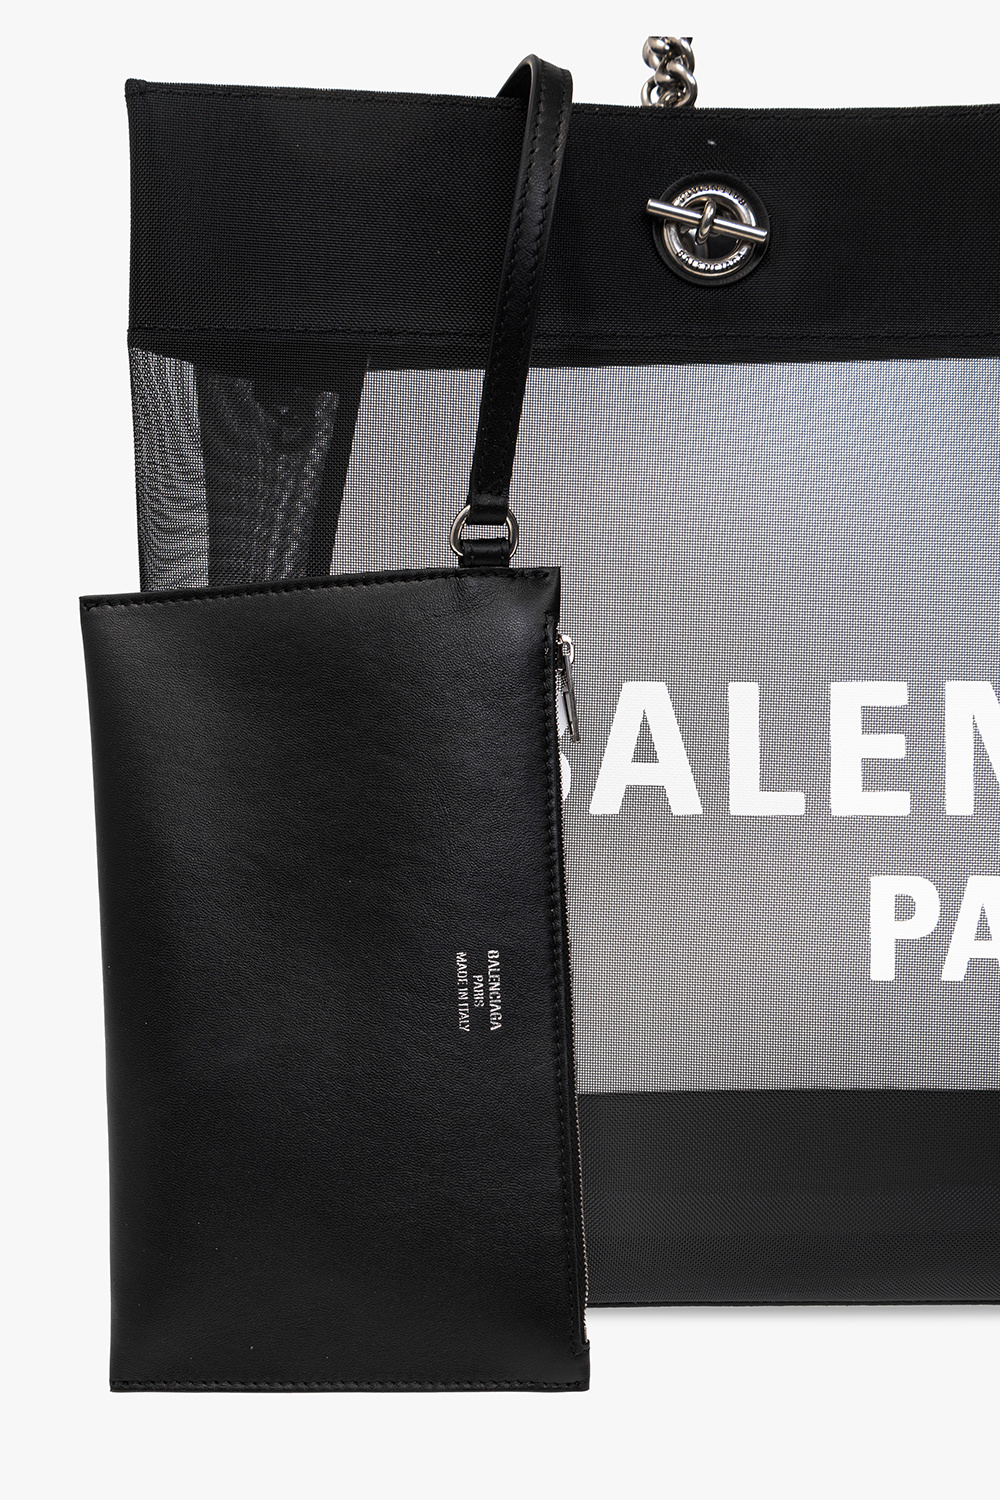 Balenciaga ‘Duty Free Large’ shopper Toni bag